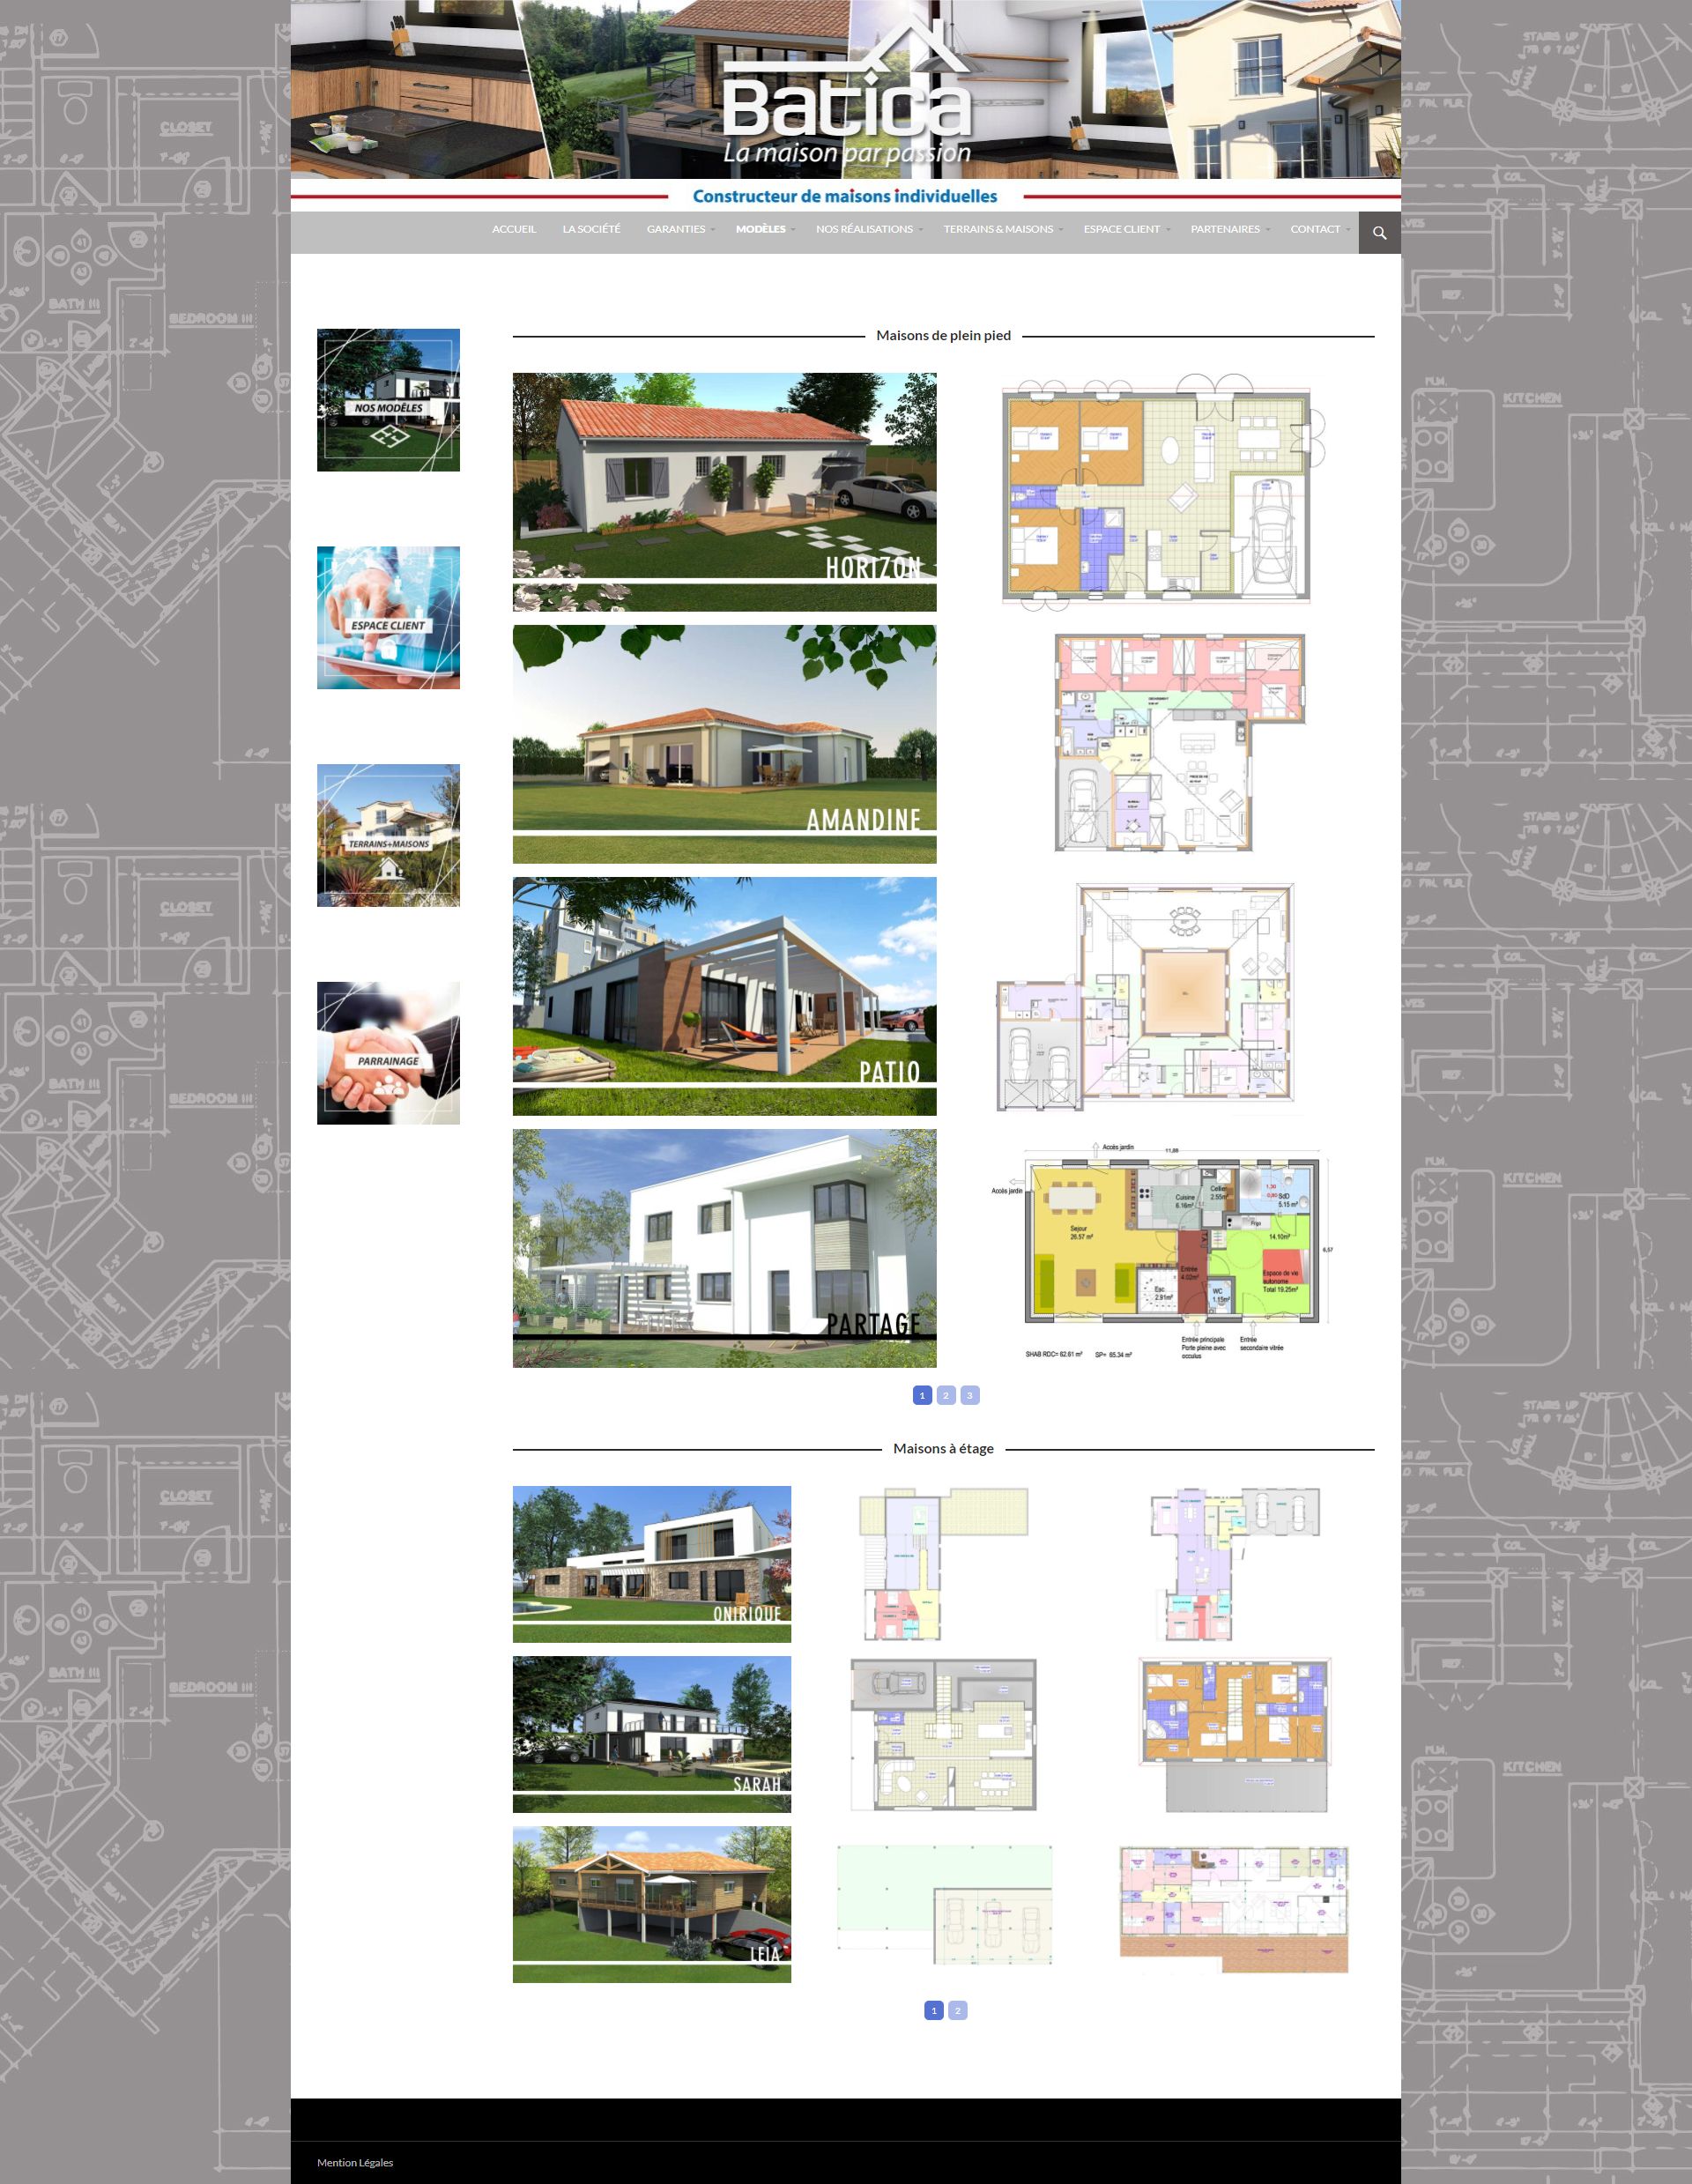 FireShot Pro Screen Capture #005 - 'nos modèles I BATICA I Constructeur de maisons individuelles' - www_batica33_fr_nos-modeles